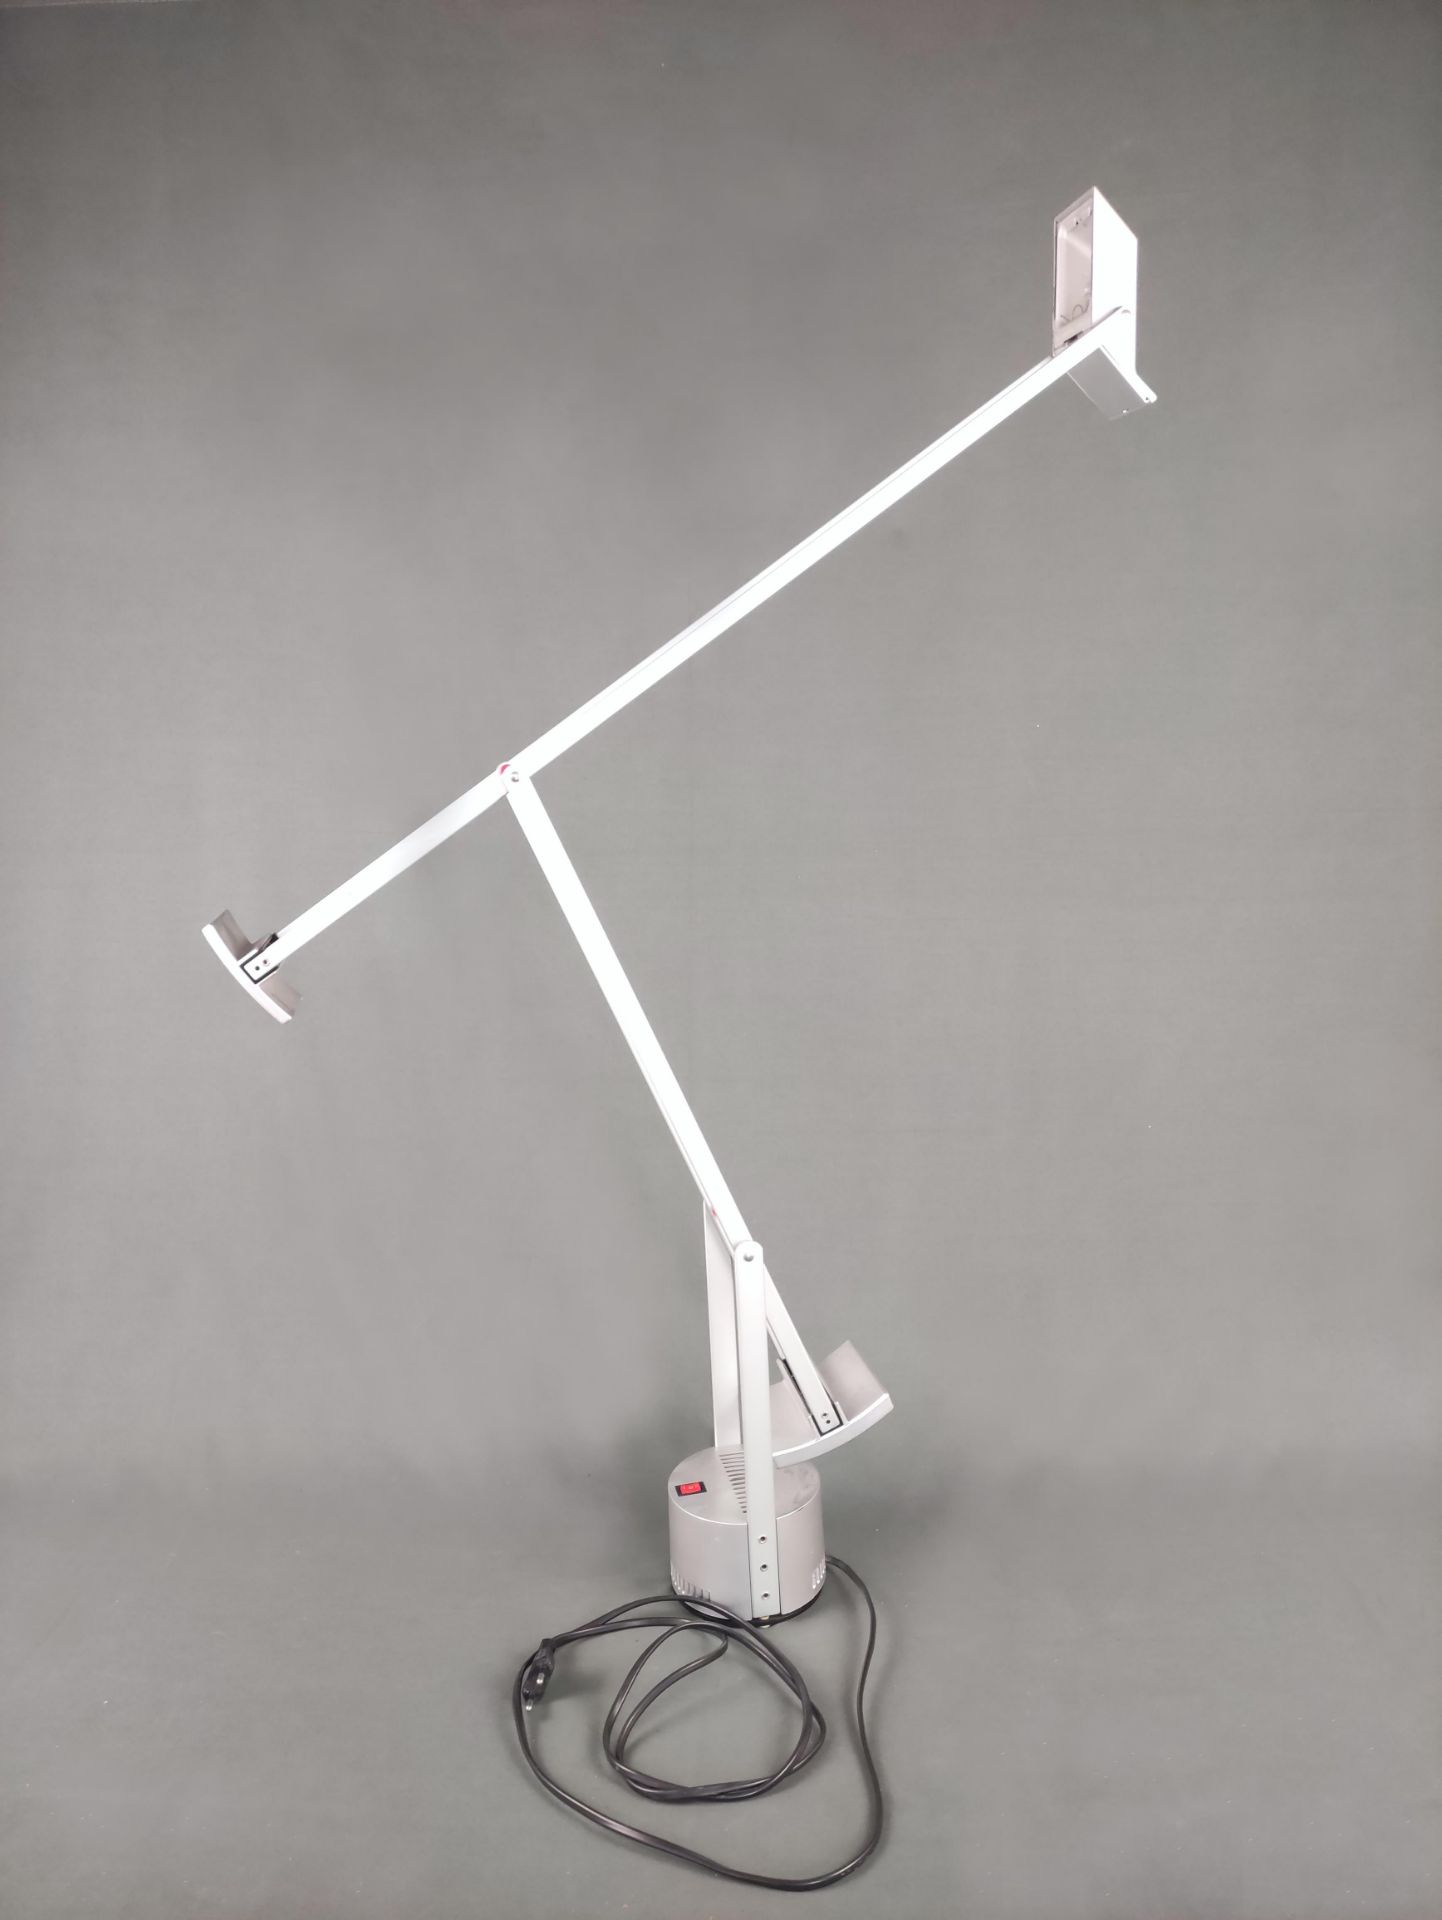 Vintage design lamp "Tizio", Artemide, design 1970s by Richard Sapper (1932 Munich-2015 Milan), ann - Image 2 of 2